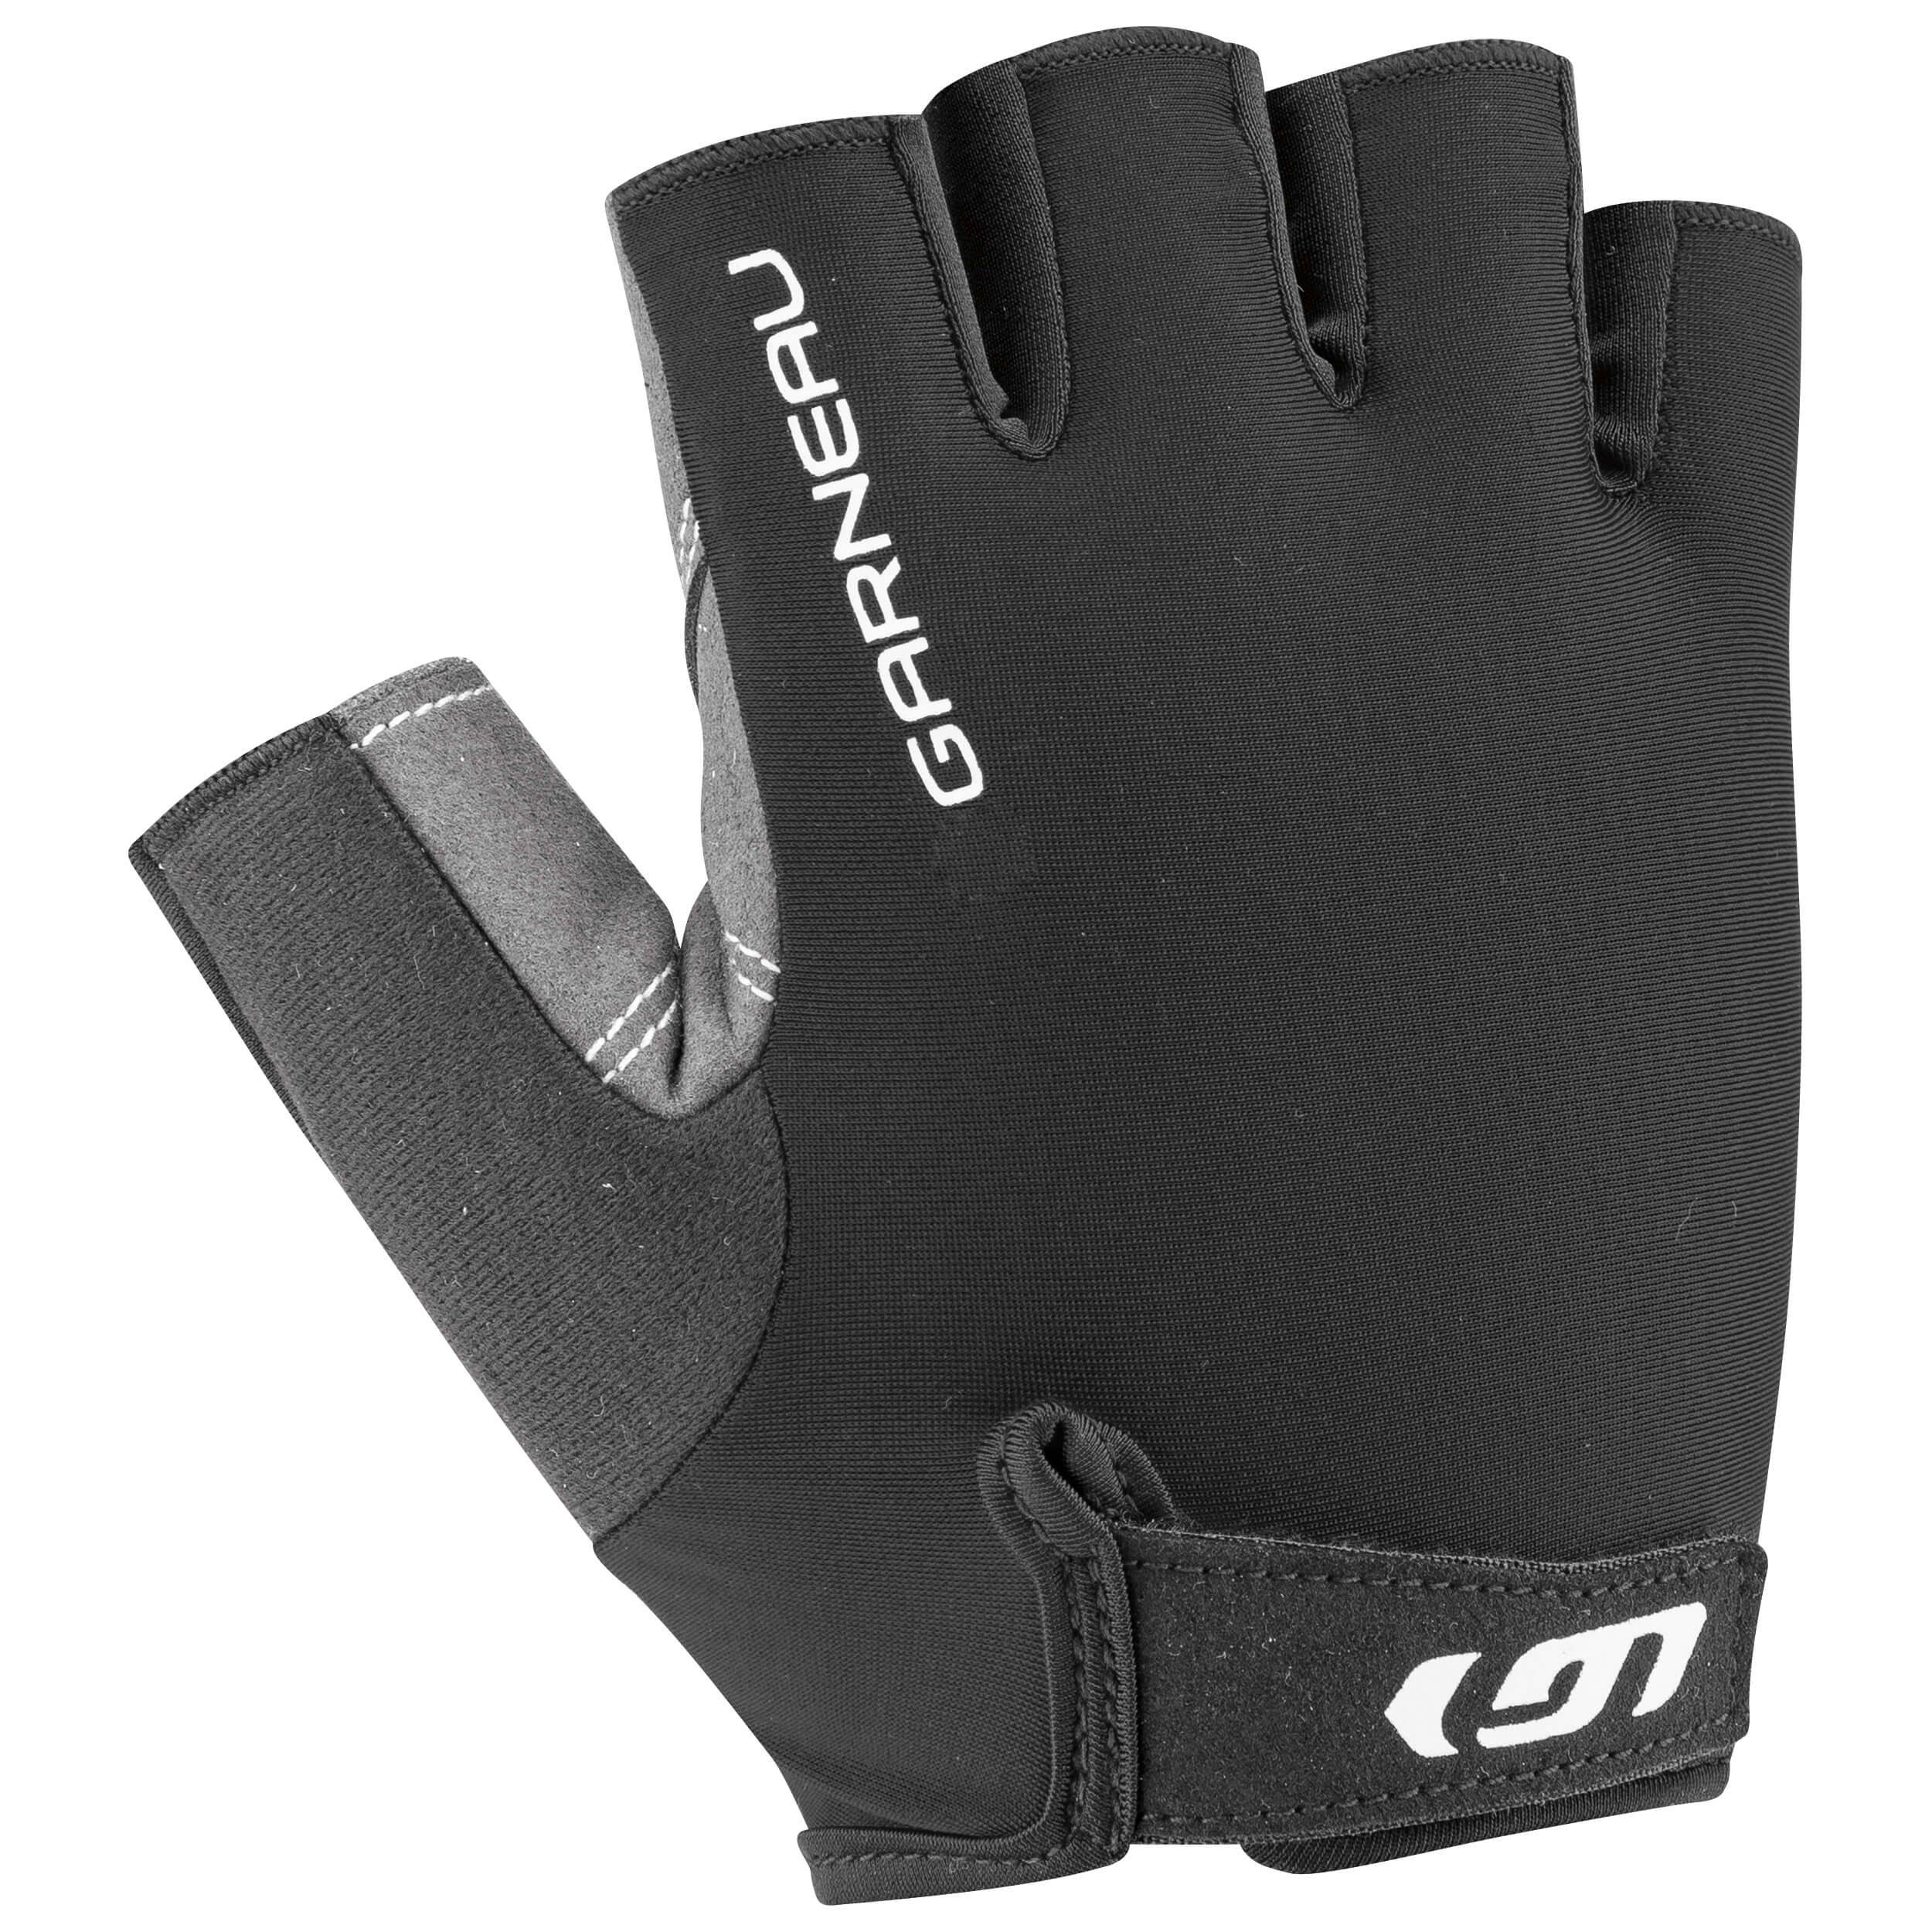 Garneau - Calory Cycling Gloves - Gloves Size XL, Black